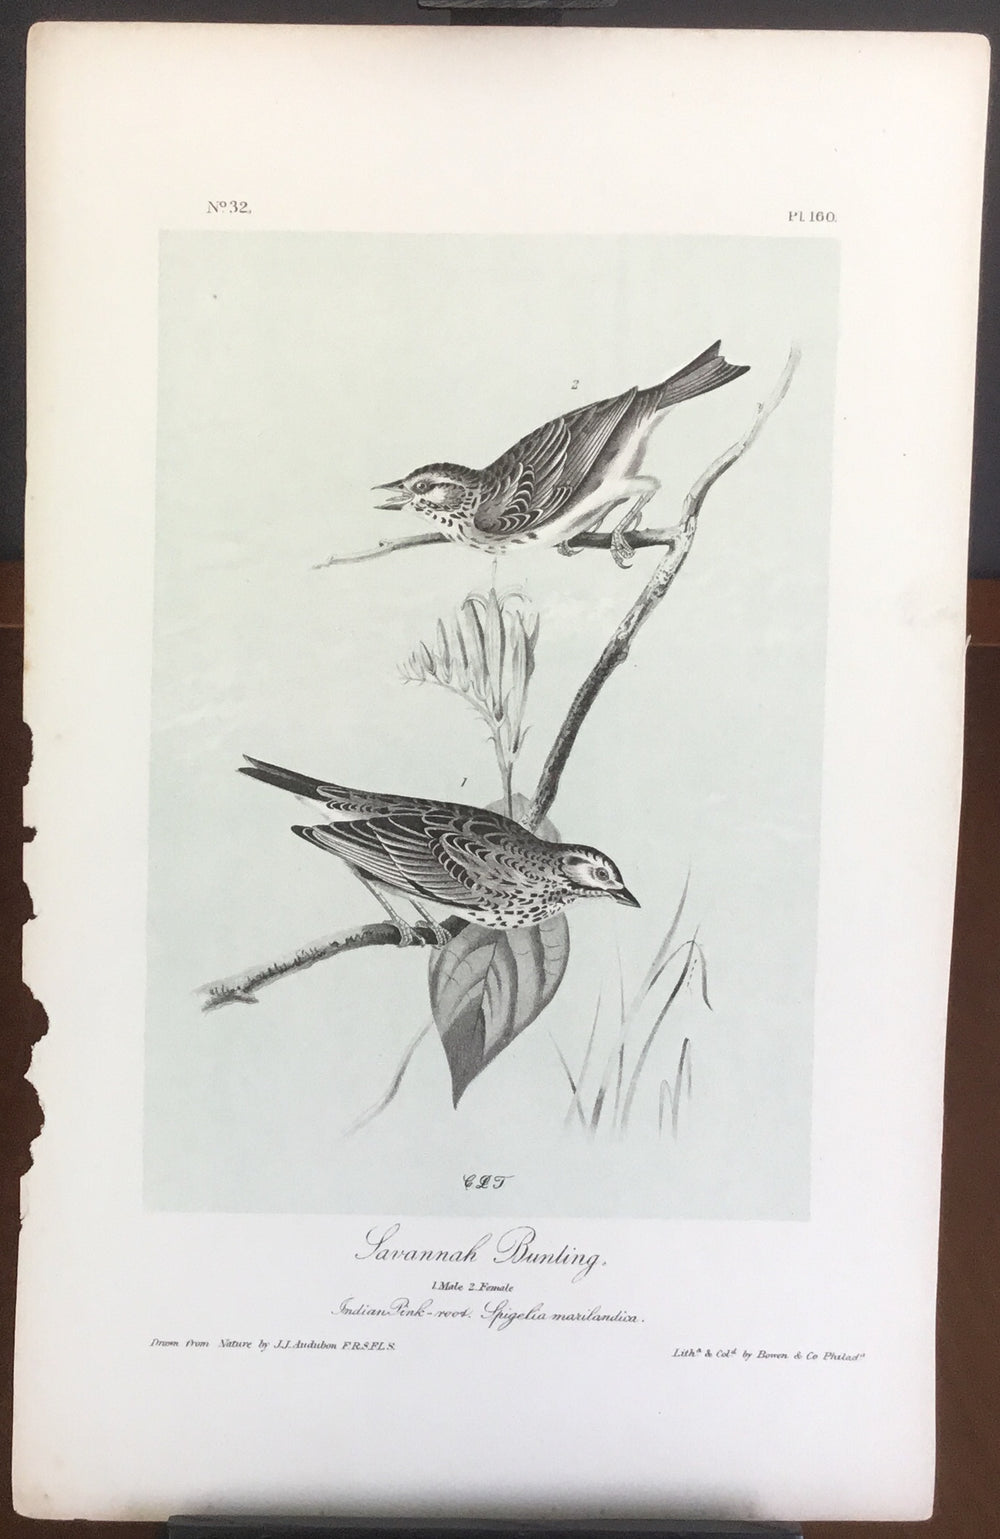 Audubon Octavo Savannah Bunting, plate 160, uncolored test sheet, 7 x 11